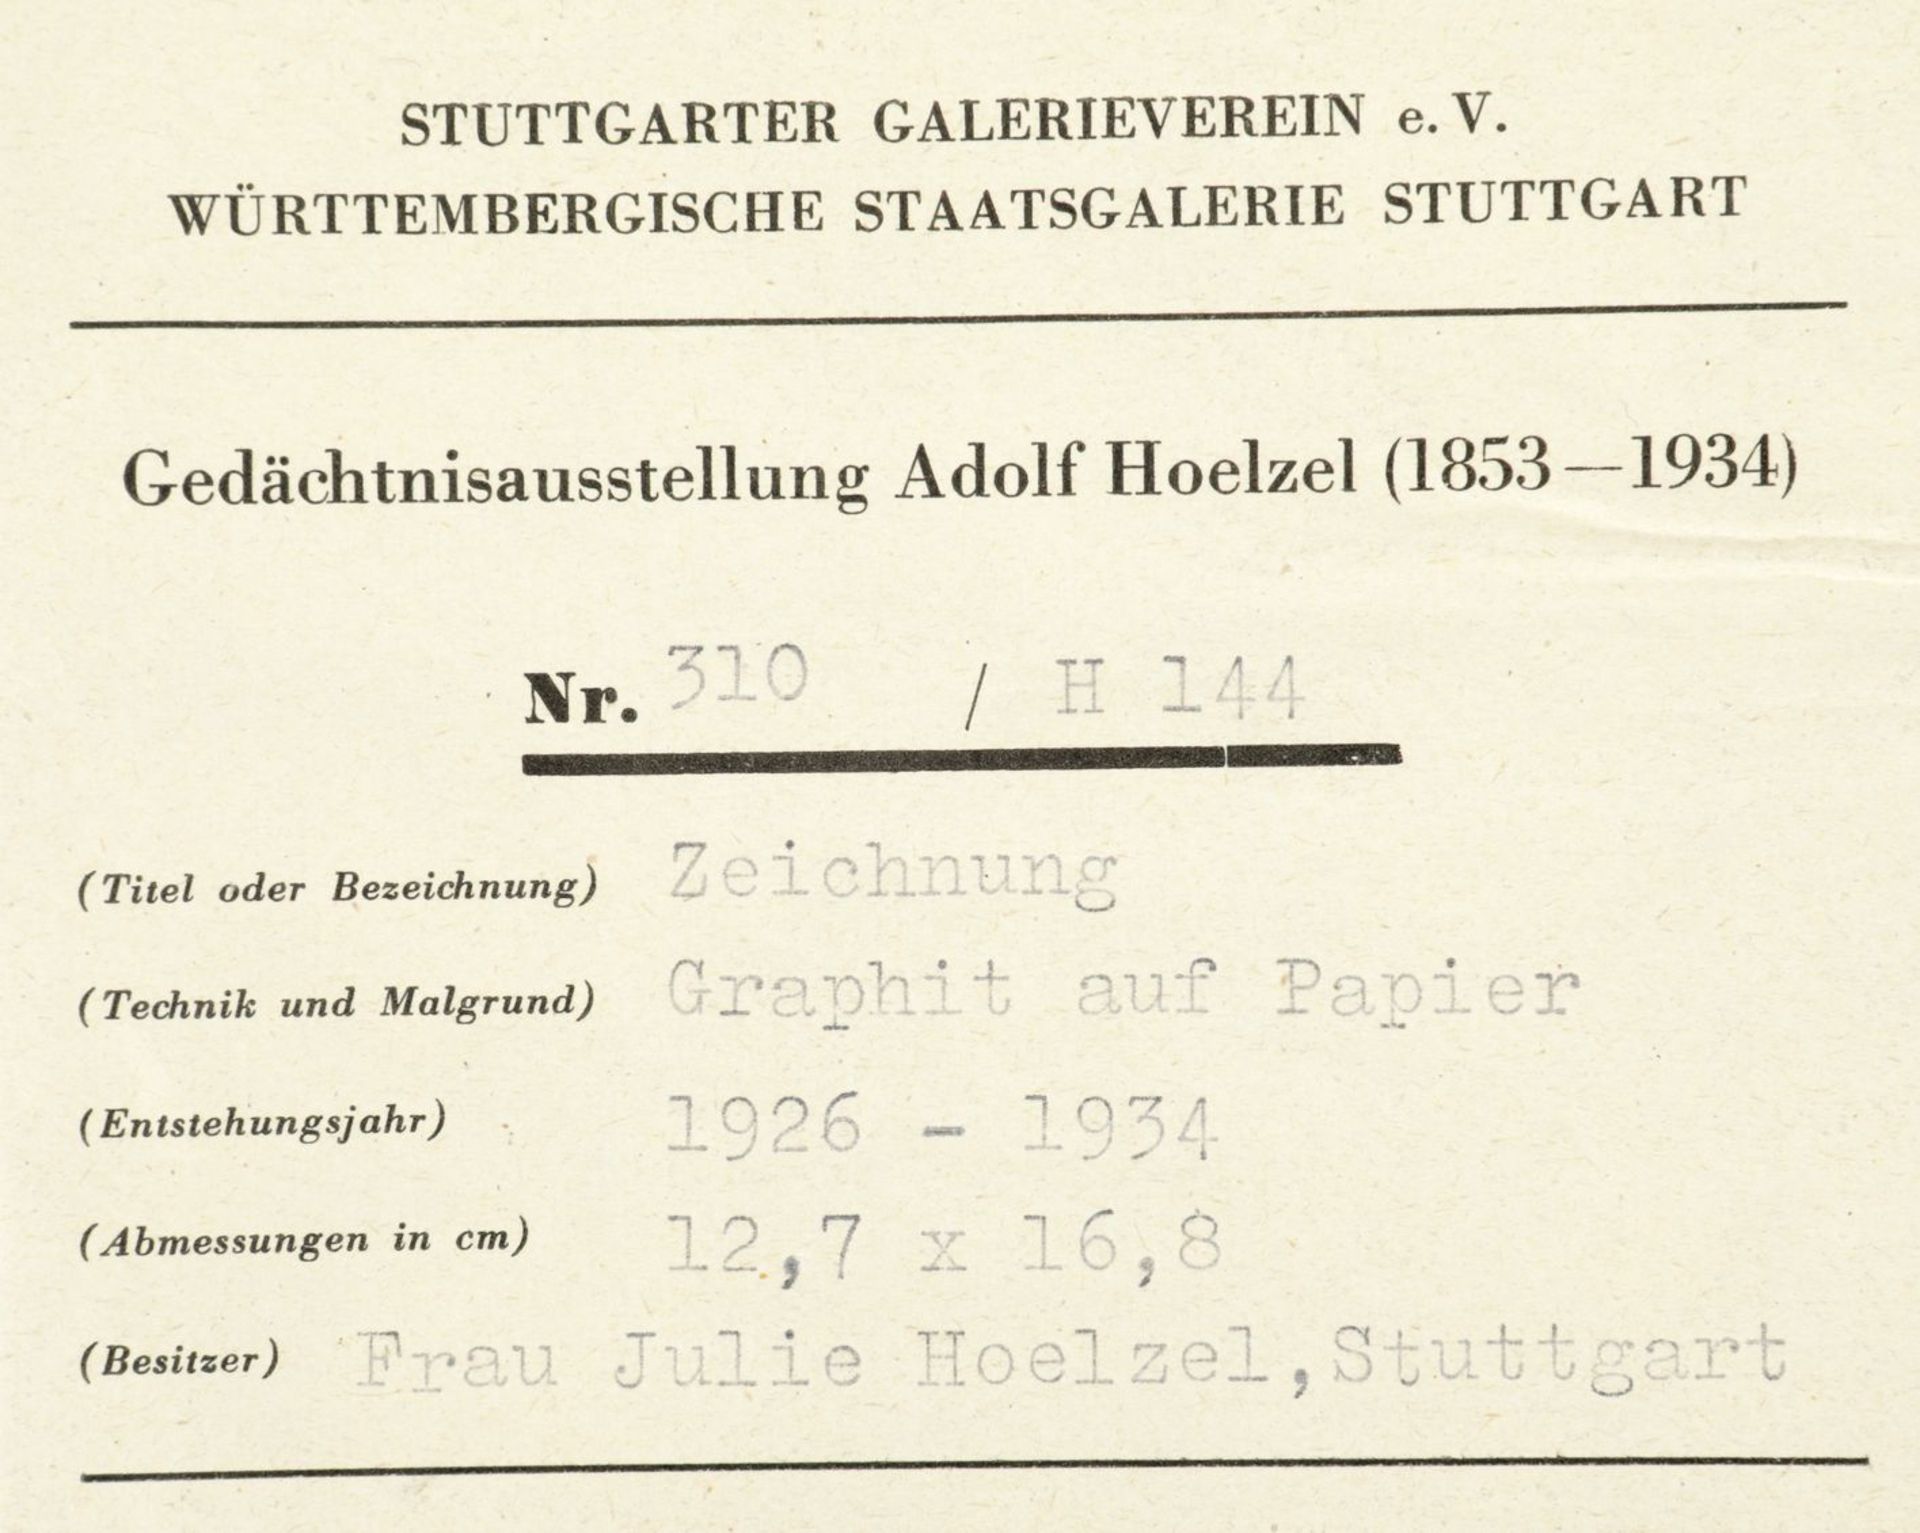 Hoelzel, Adolf - Image 3 of 3